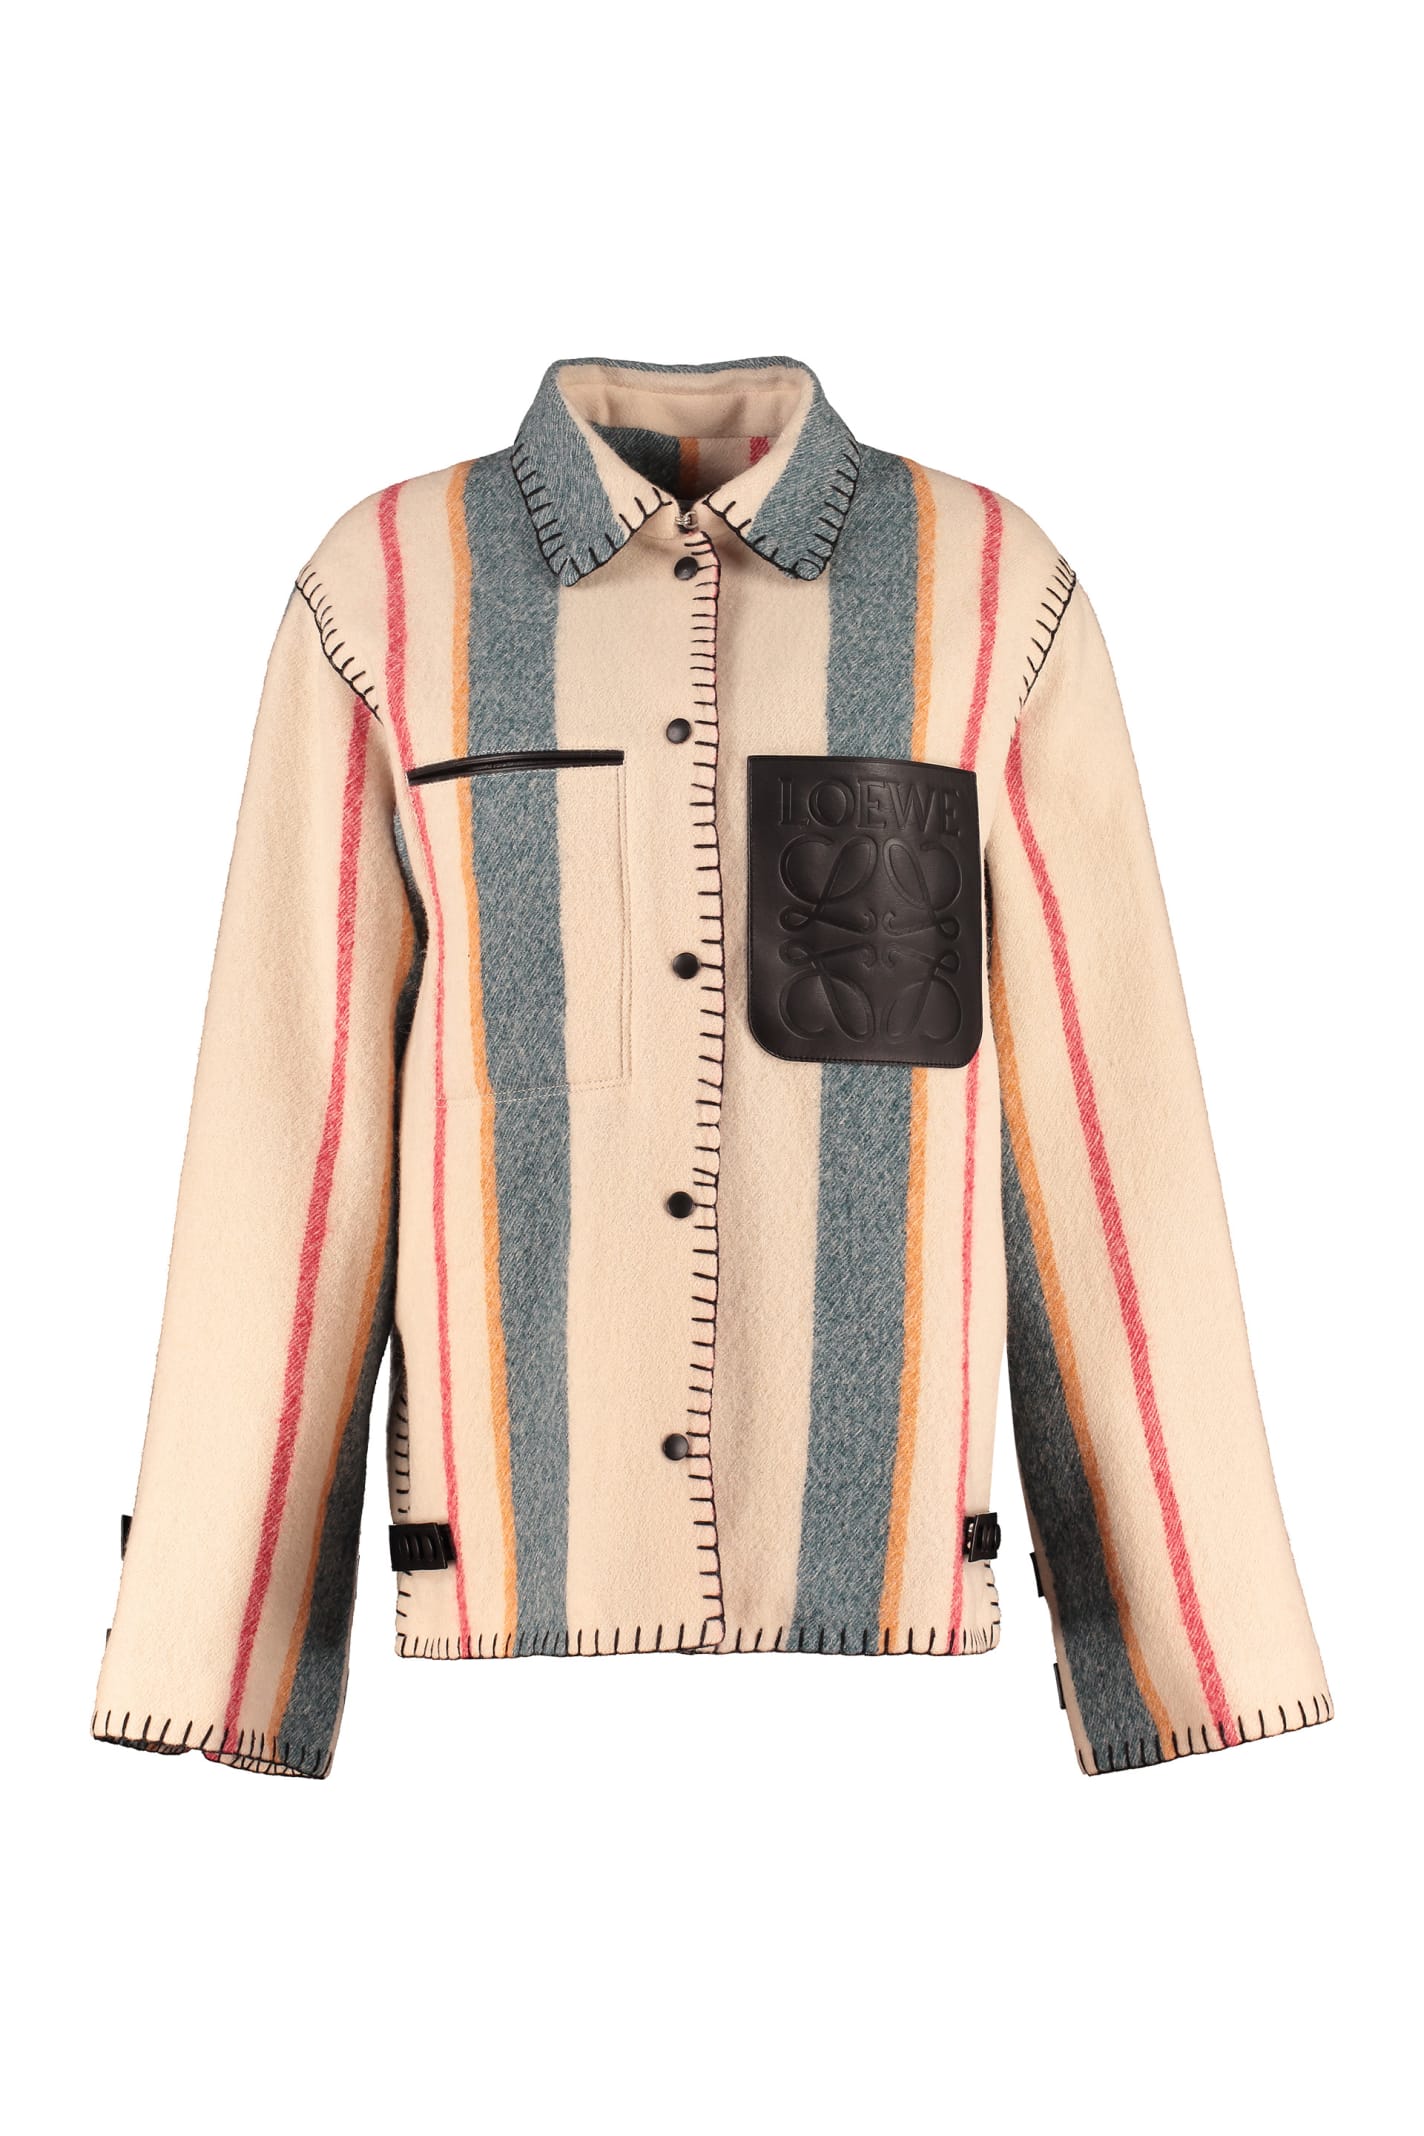 Loewe Wool Buttons Jacket